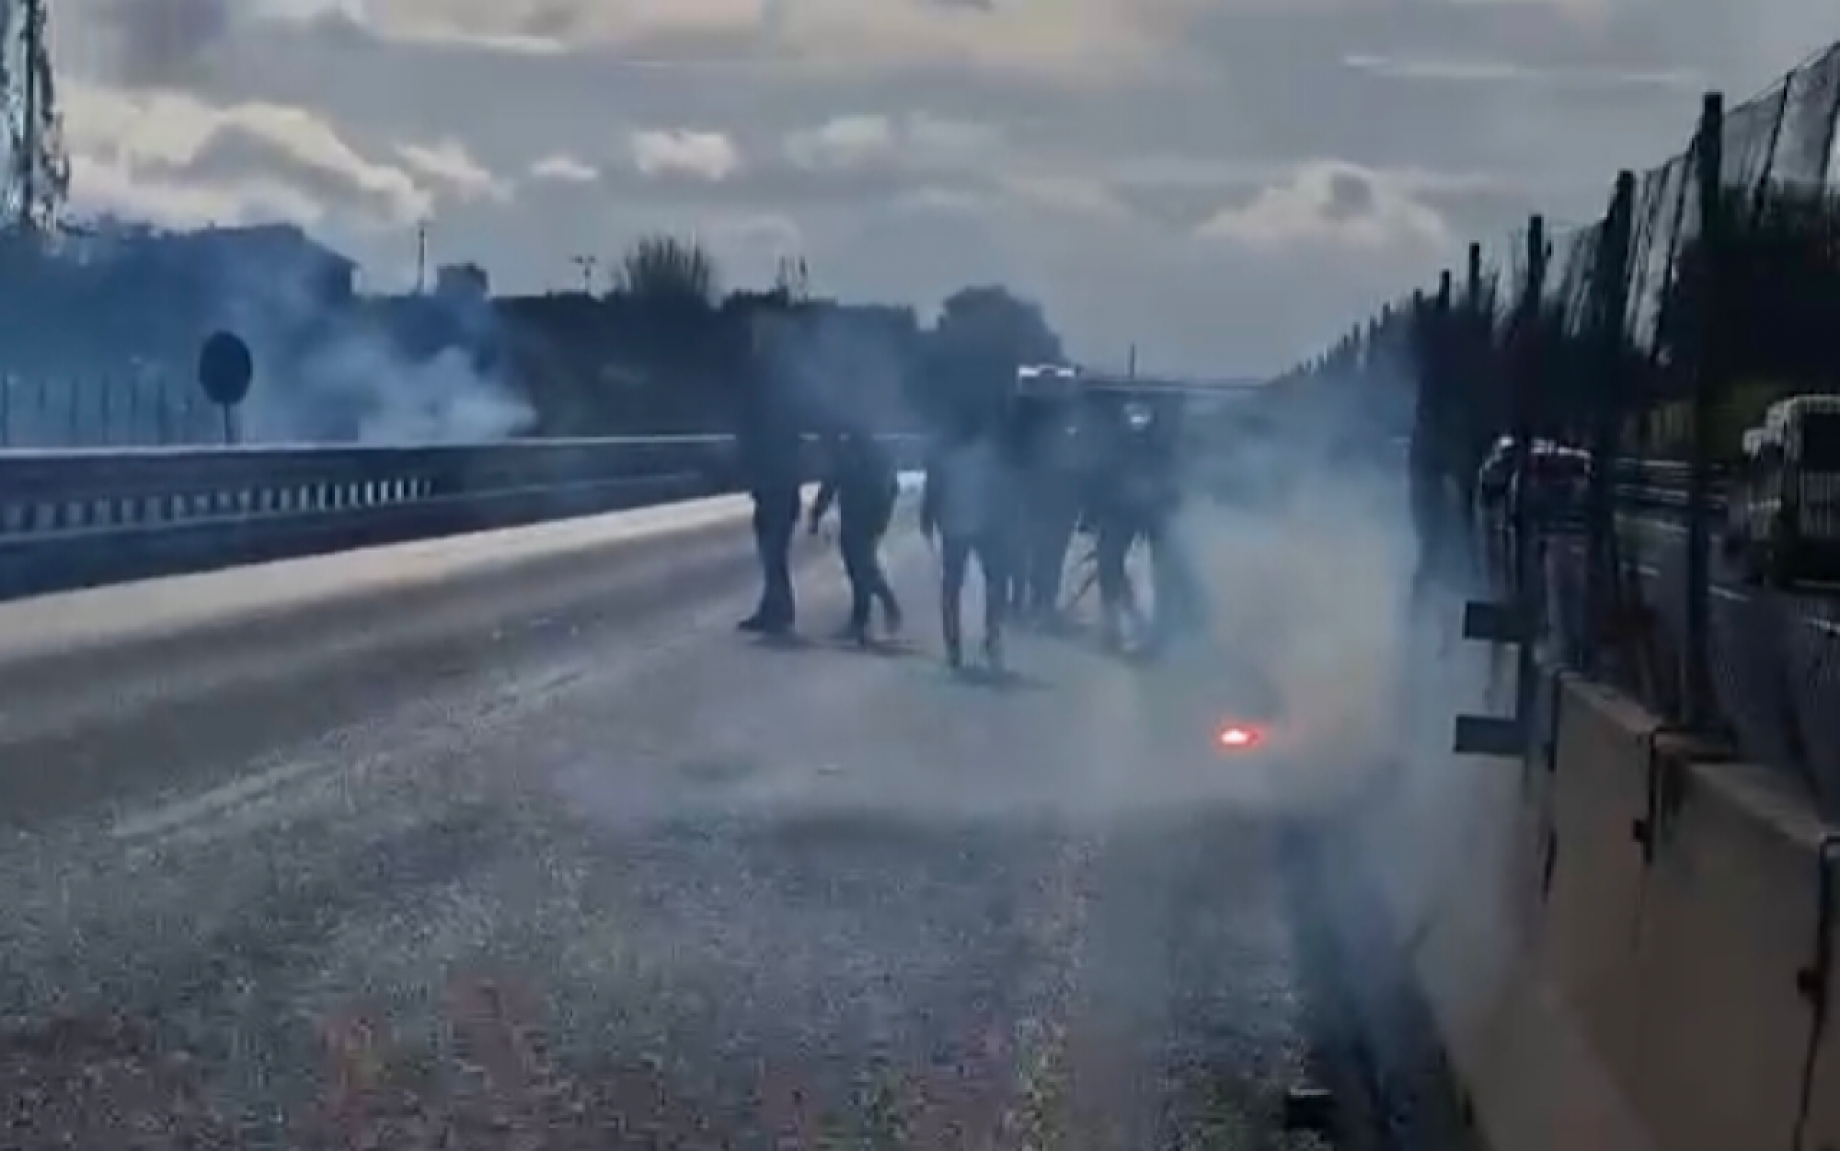 scontro-ultras-napoli-roma-autostrada-screen-gpo.png